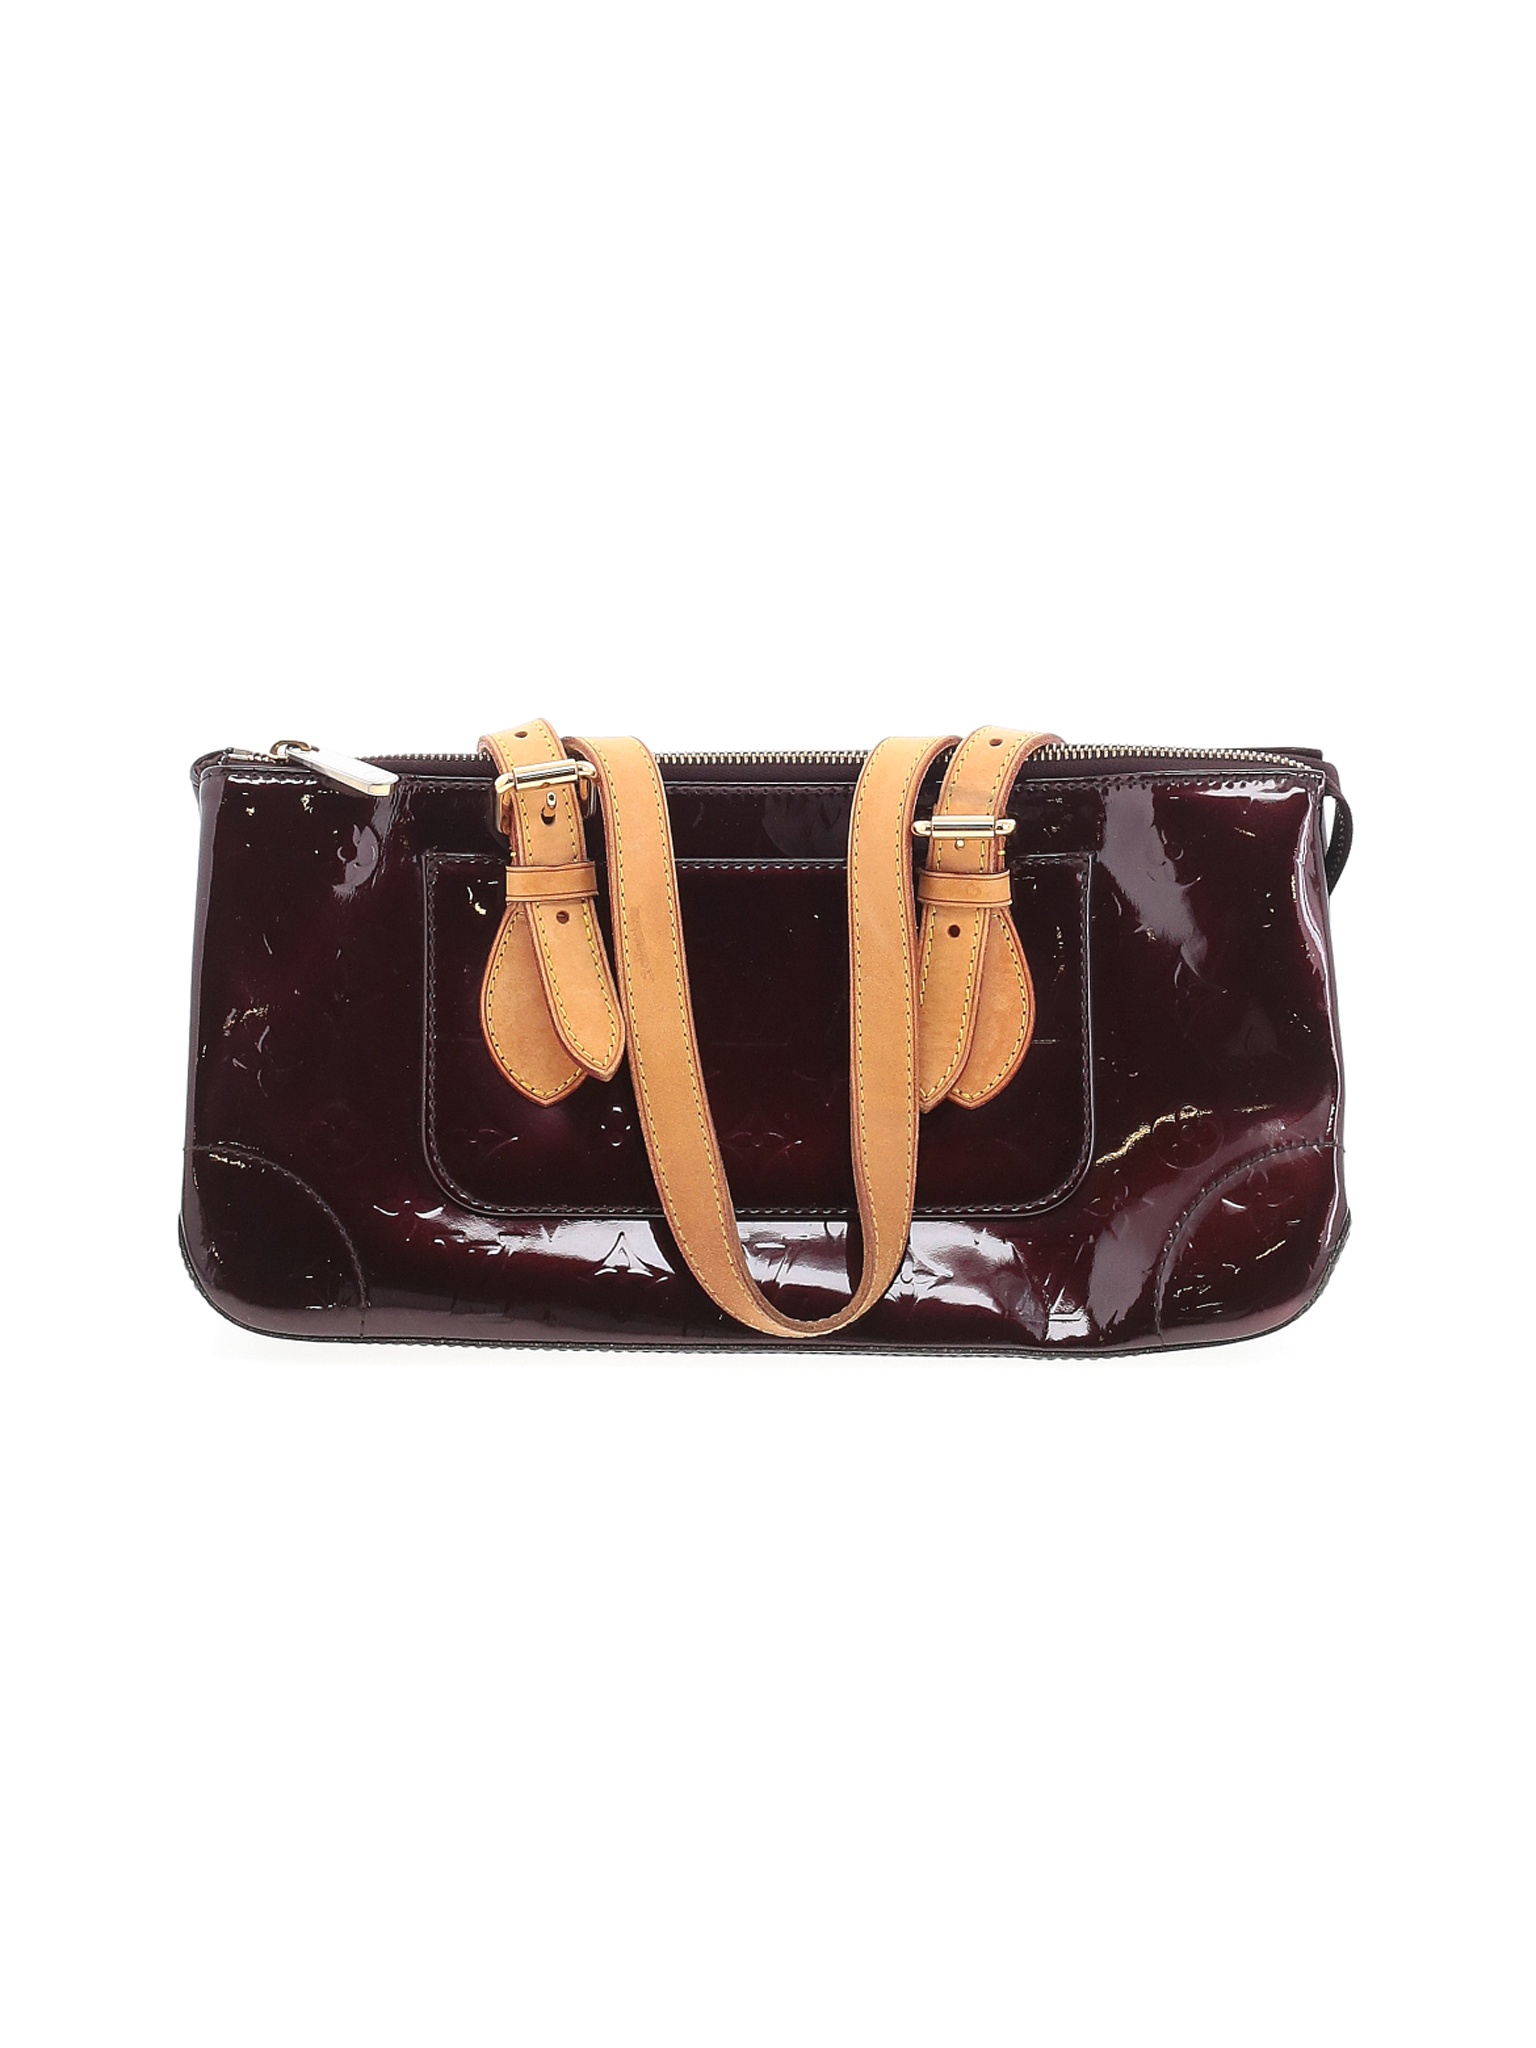 Louis Vuitton Women Brown Leather Shoulder Bag One Size | eBay